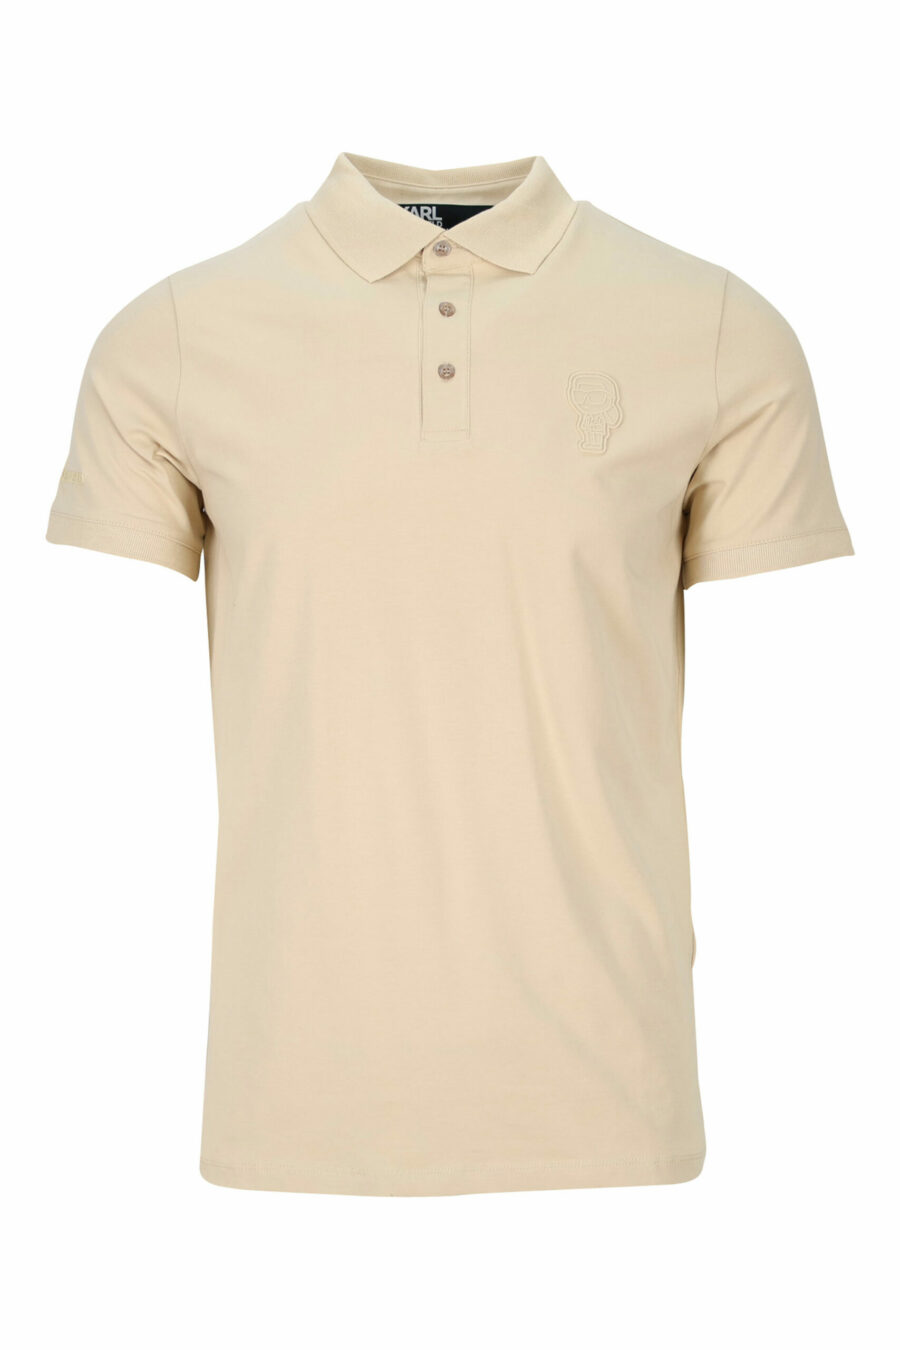 Beigefarbenes Poloshirt mit monochromem Mini-Logo - 4062226398558 skaliert